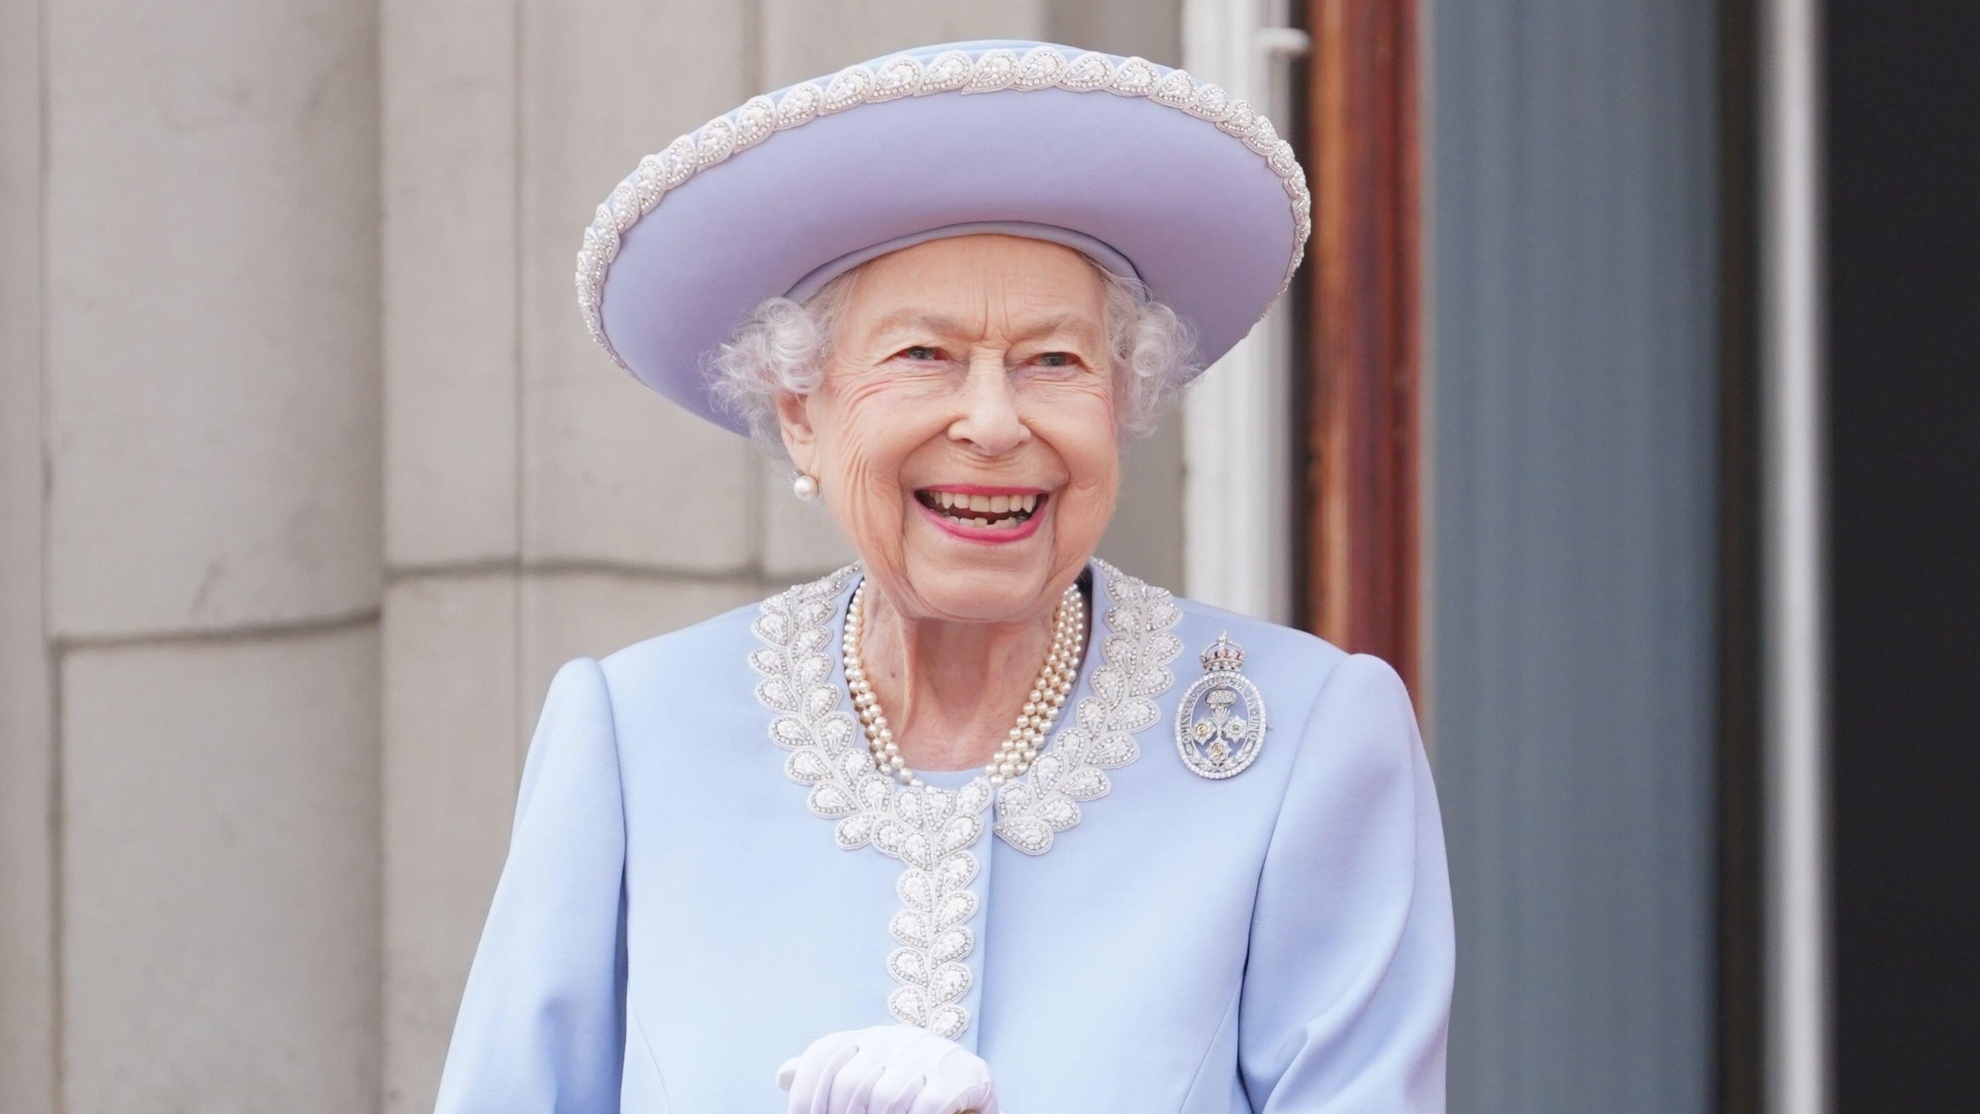 Sarah Fergusons touching birthday message to Queen Elizabeth II: A dear friend